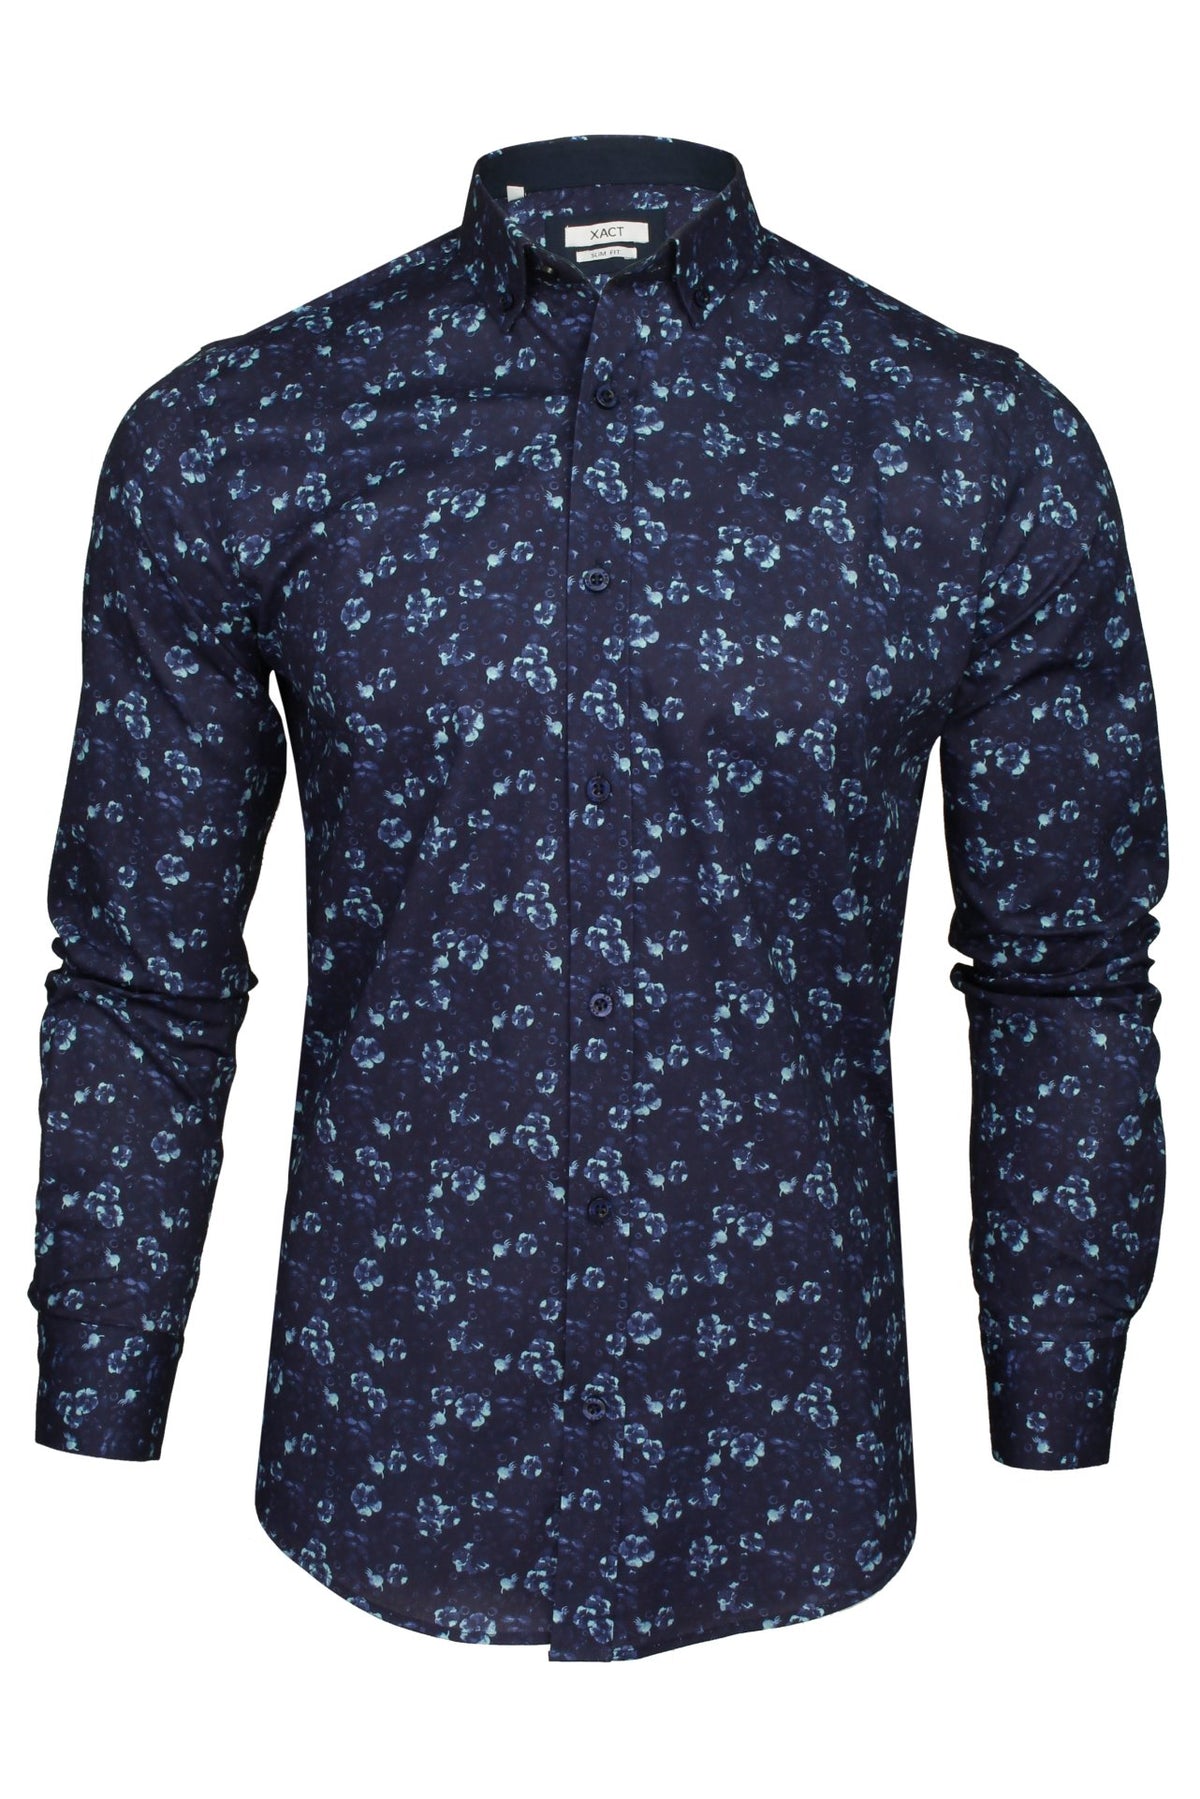 Xact Mens Floral Long Sleeved Shirt, 01, Xsh1089, Navy/ Blue